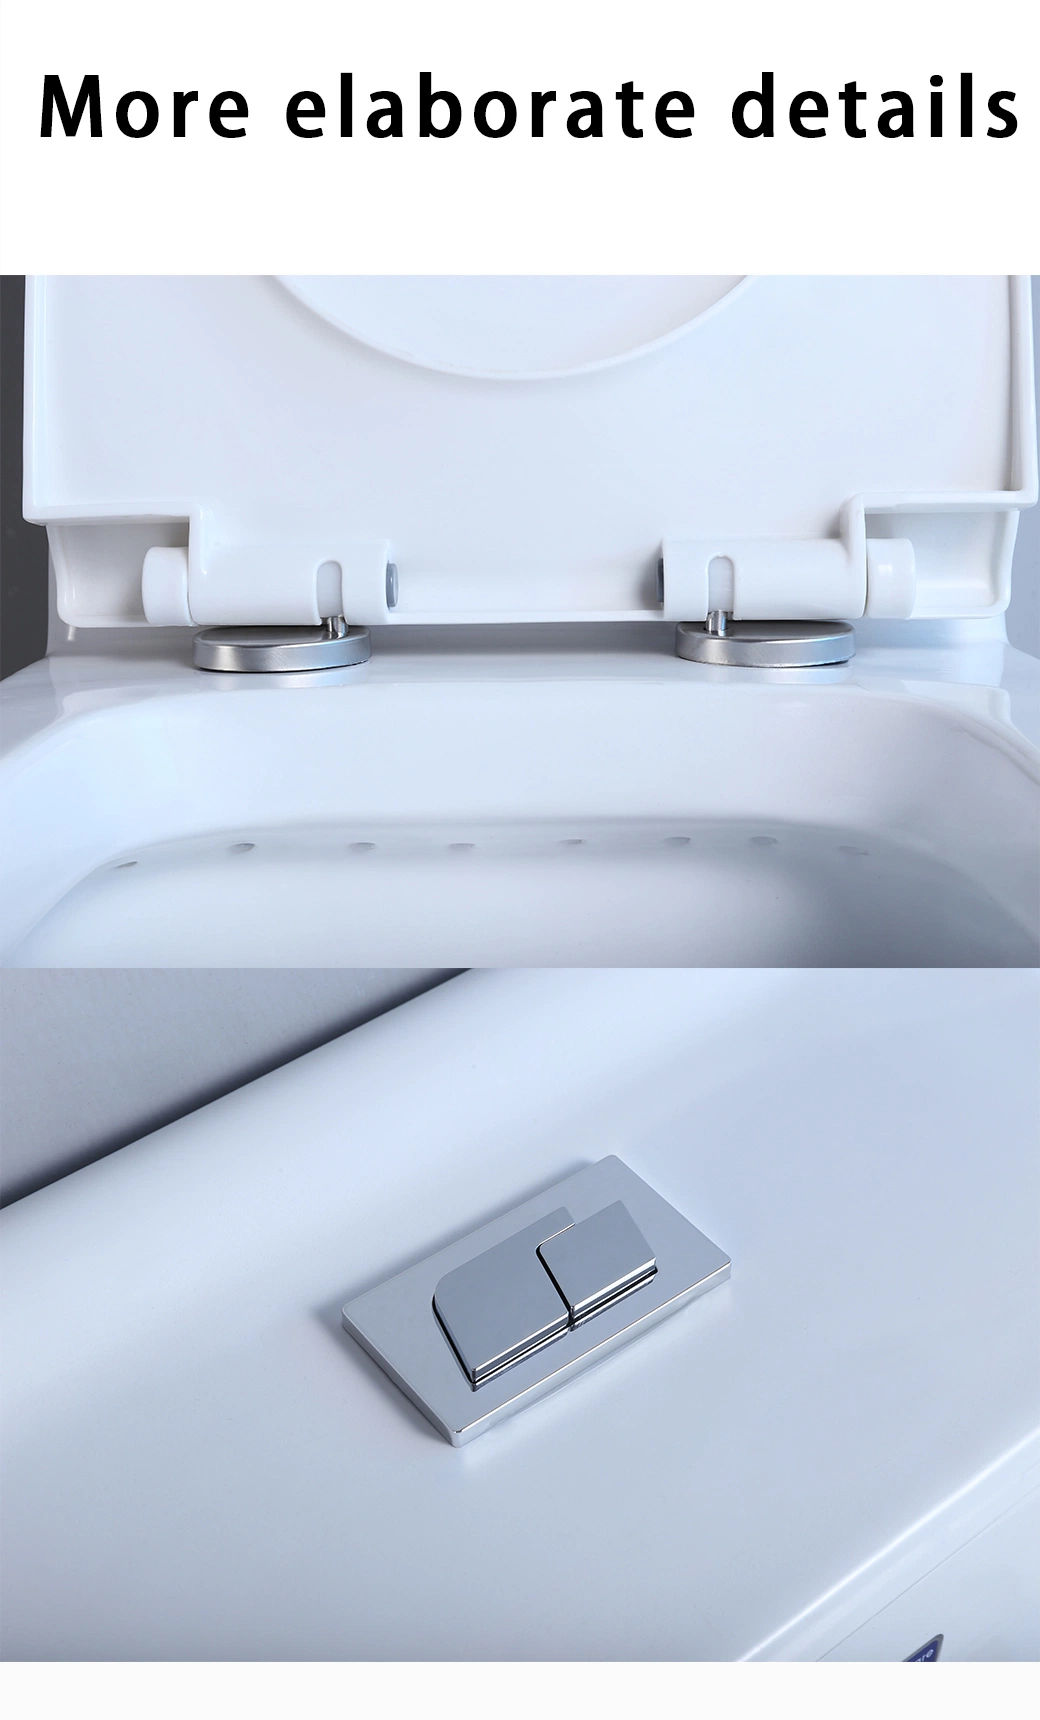 Self-Clean Nano Water Closet One-Piece Sanitary Ware Wc Siphonic Bathroom Toilet